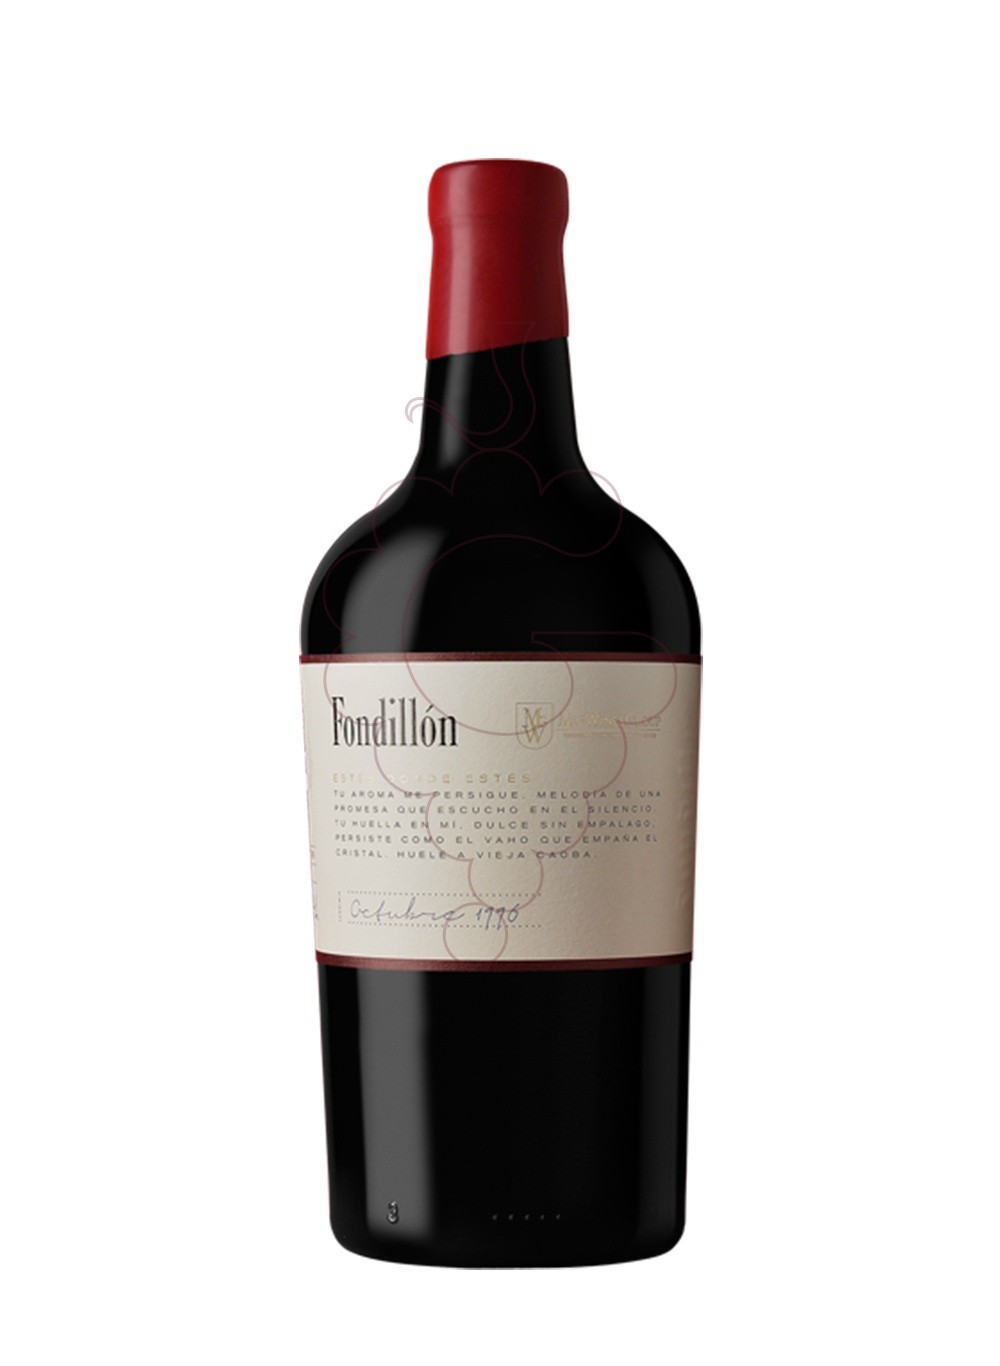 Photo Fondillón 1996 “Estés donde estés” fortified wine